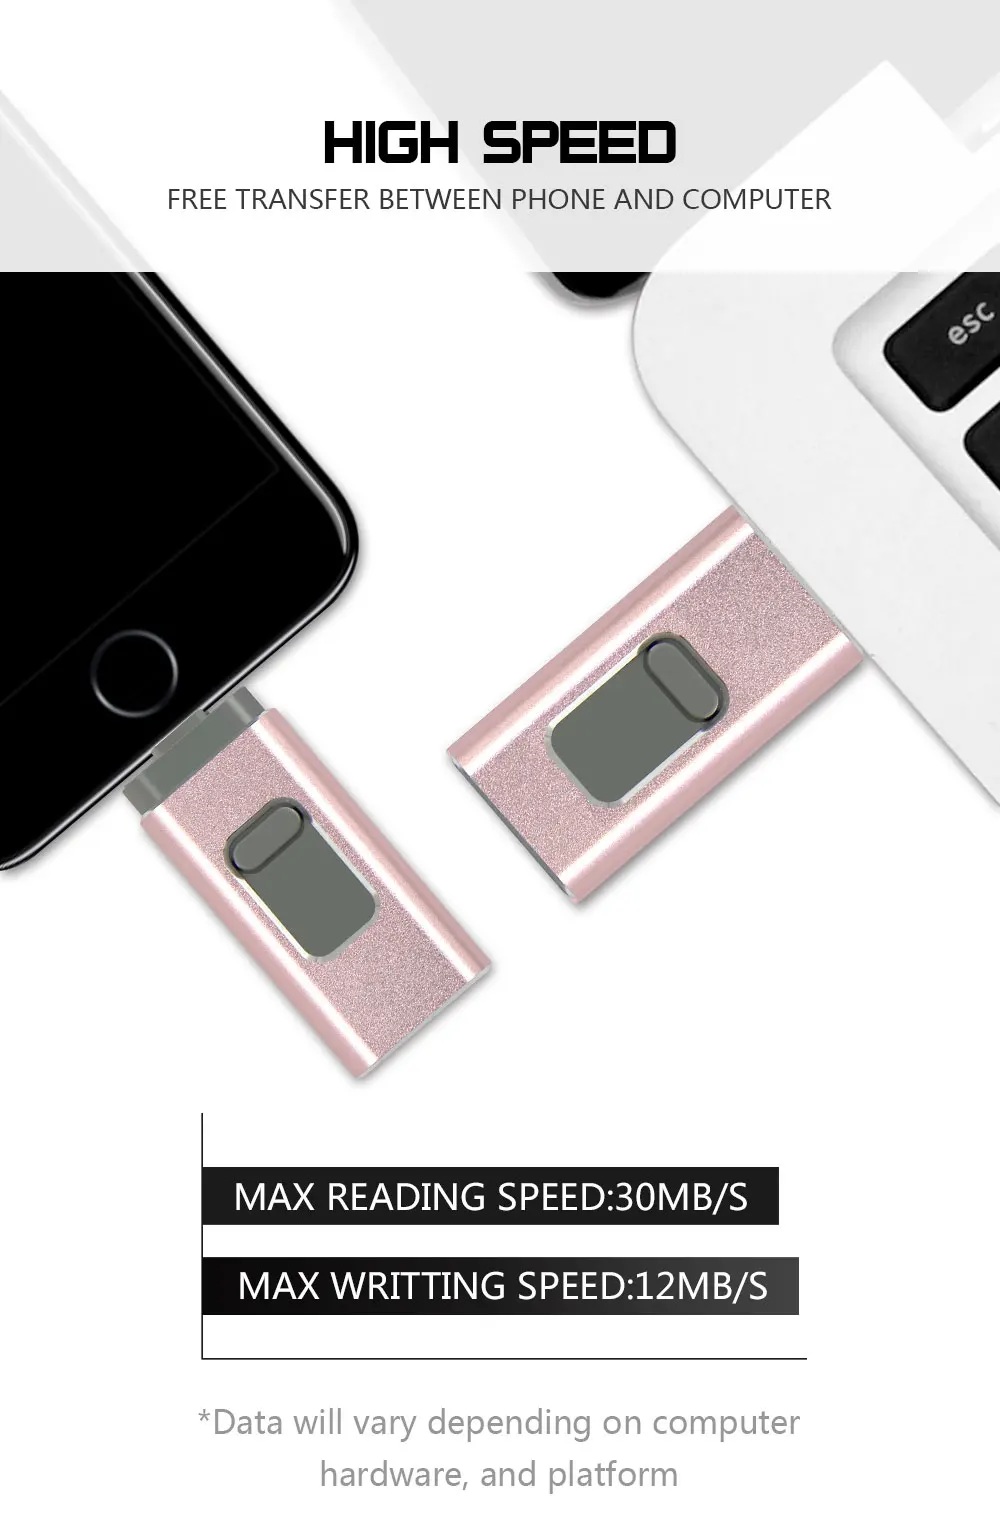 IOS USB флэш-накопитель для iPhone X/8/7/7 Plus/6 Plus/6s/5/SE/ipad портативный флэш-накопитель HD флеш-накопитель 16 ГБ 32 ГБ 64 Гб 128 Гб флешки, USB флеш-карта